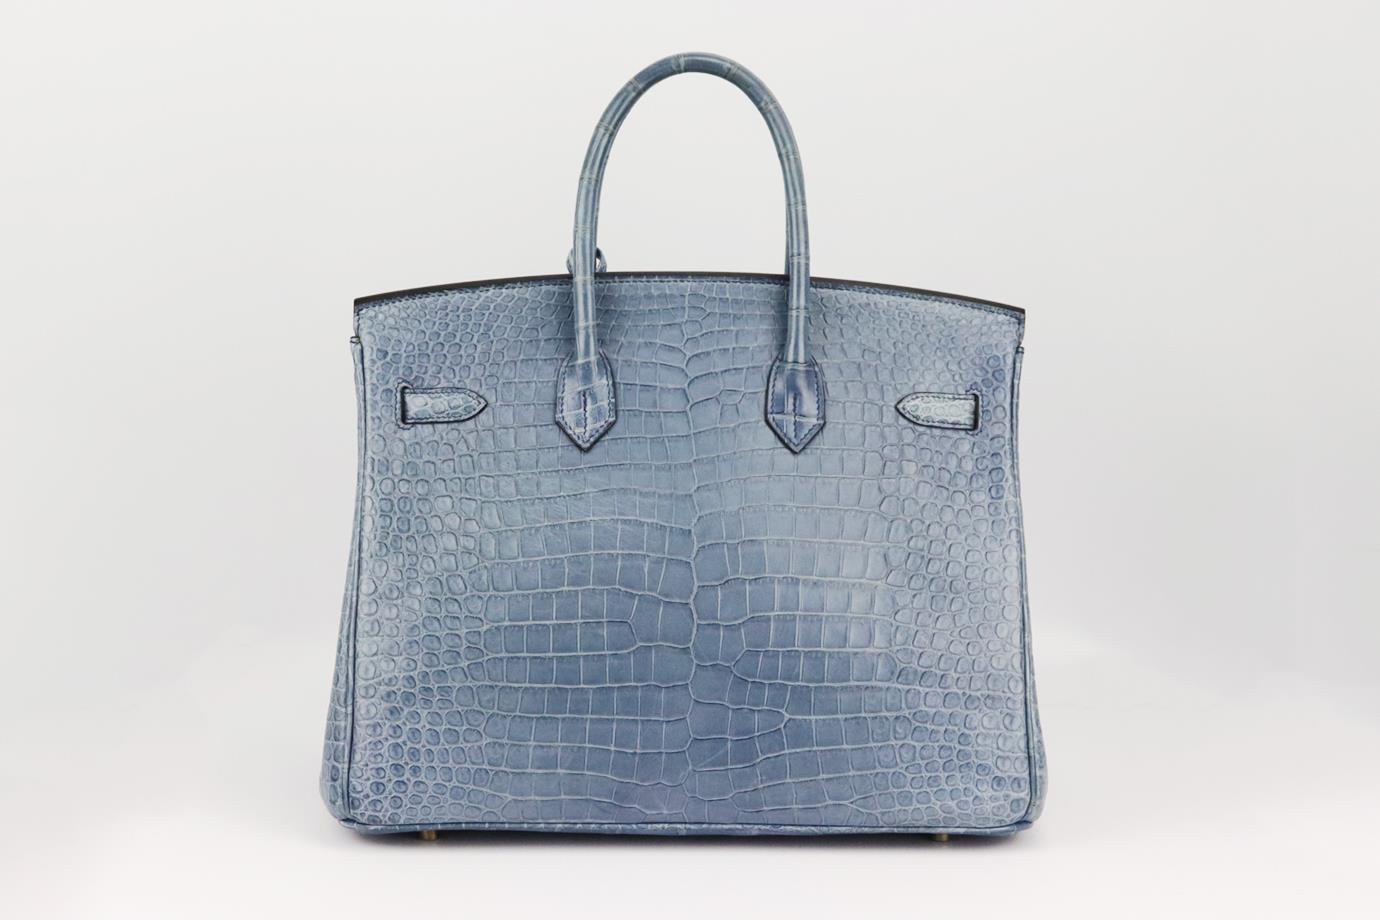 Hermès 2010 Birkin 35cm Matte Crocodile Porosus Leather Bag In Excellent Condition For Sale In London, GB